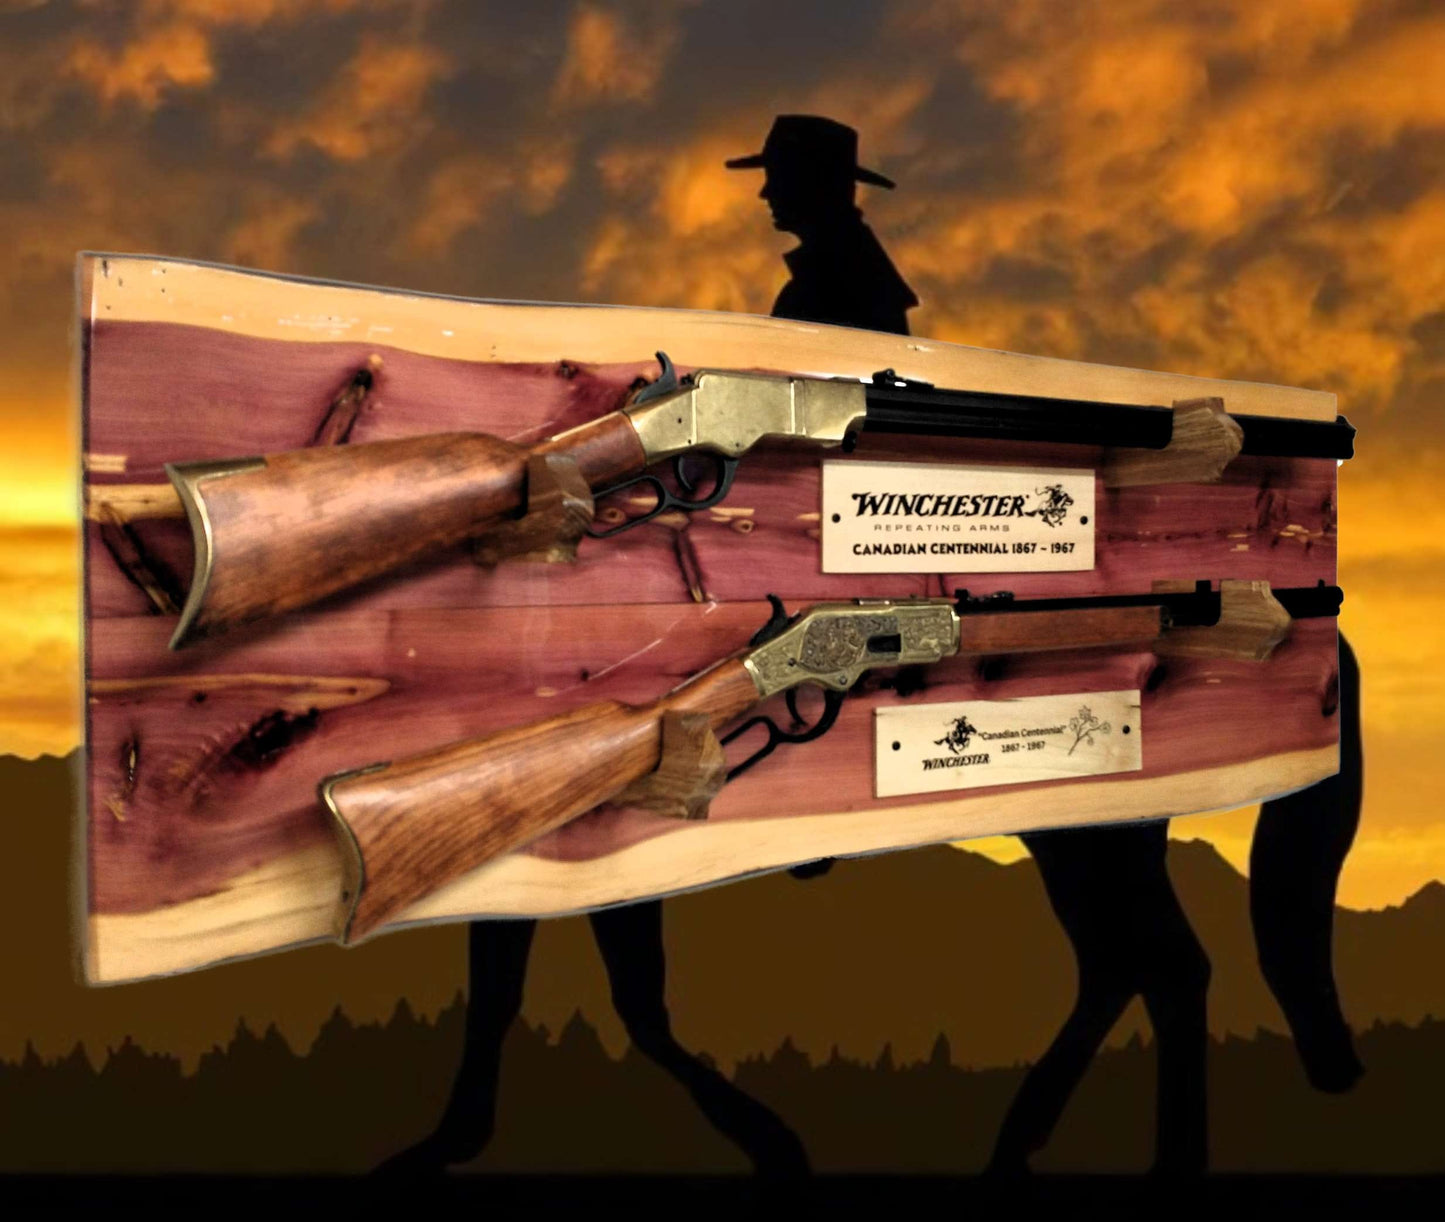 walkerwoodgifts Custom Designed 2 Place Gun Display, Live Edge Red Knotty Cedar